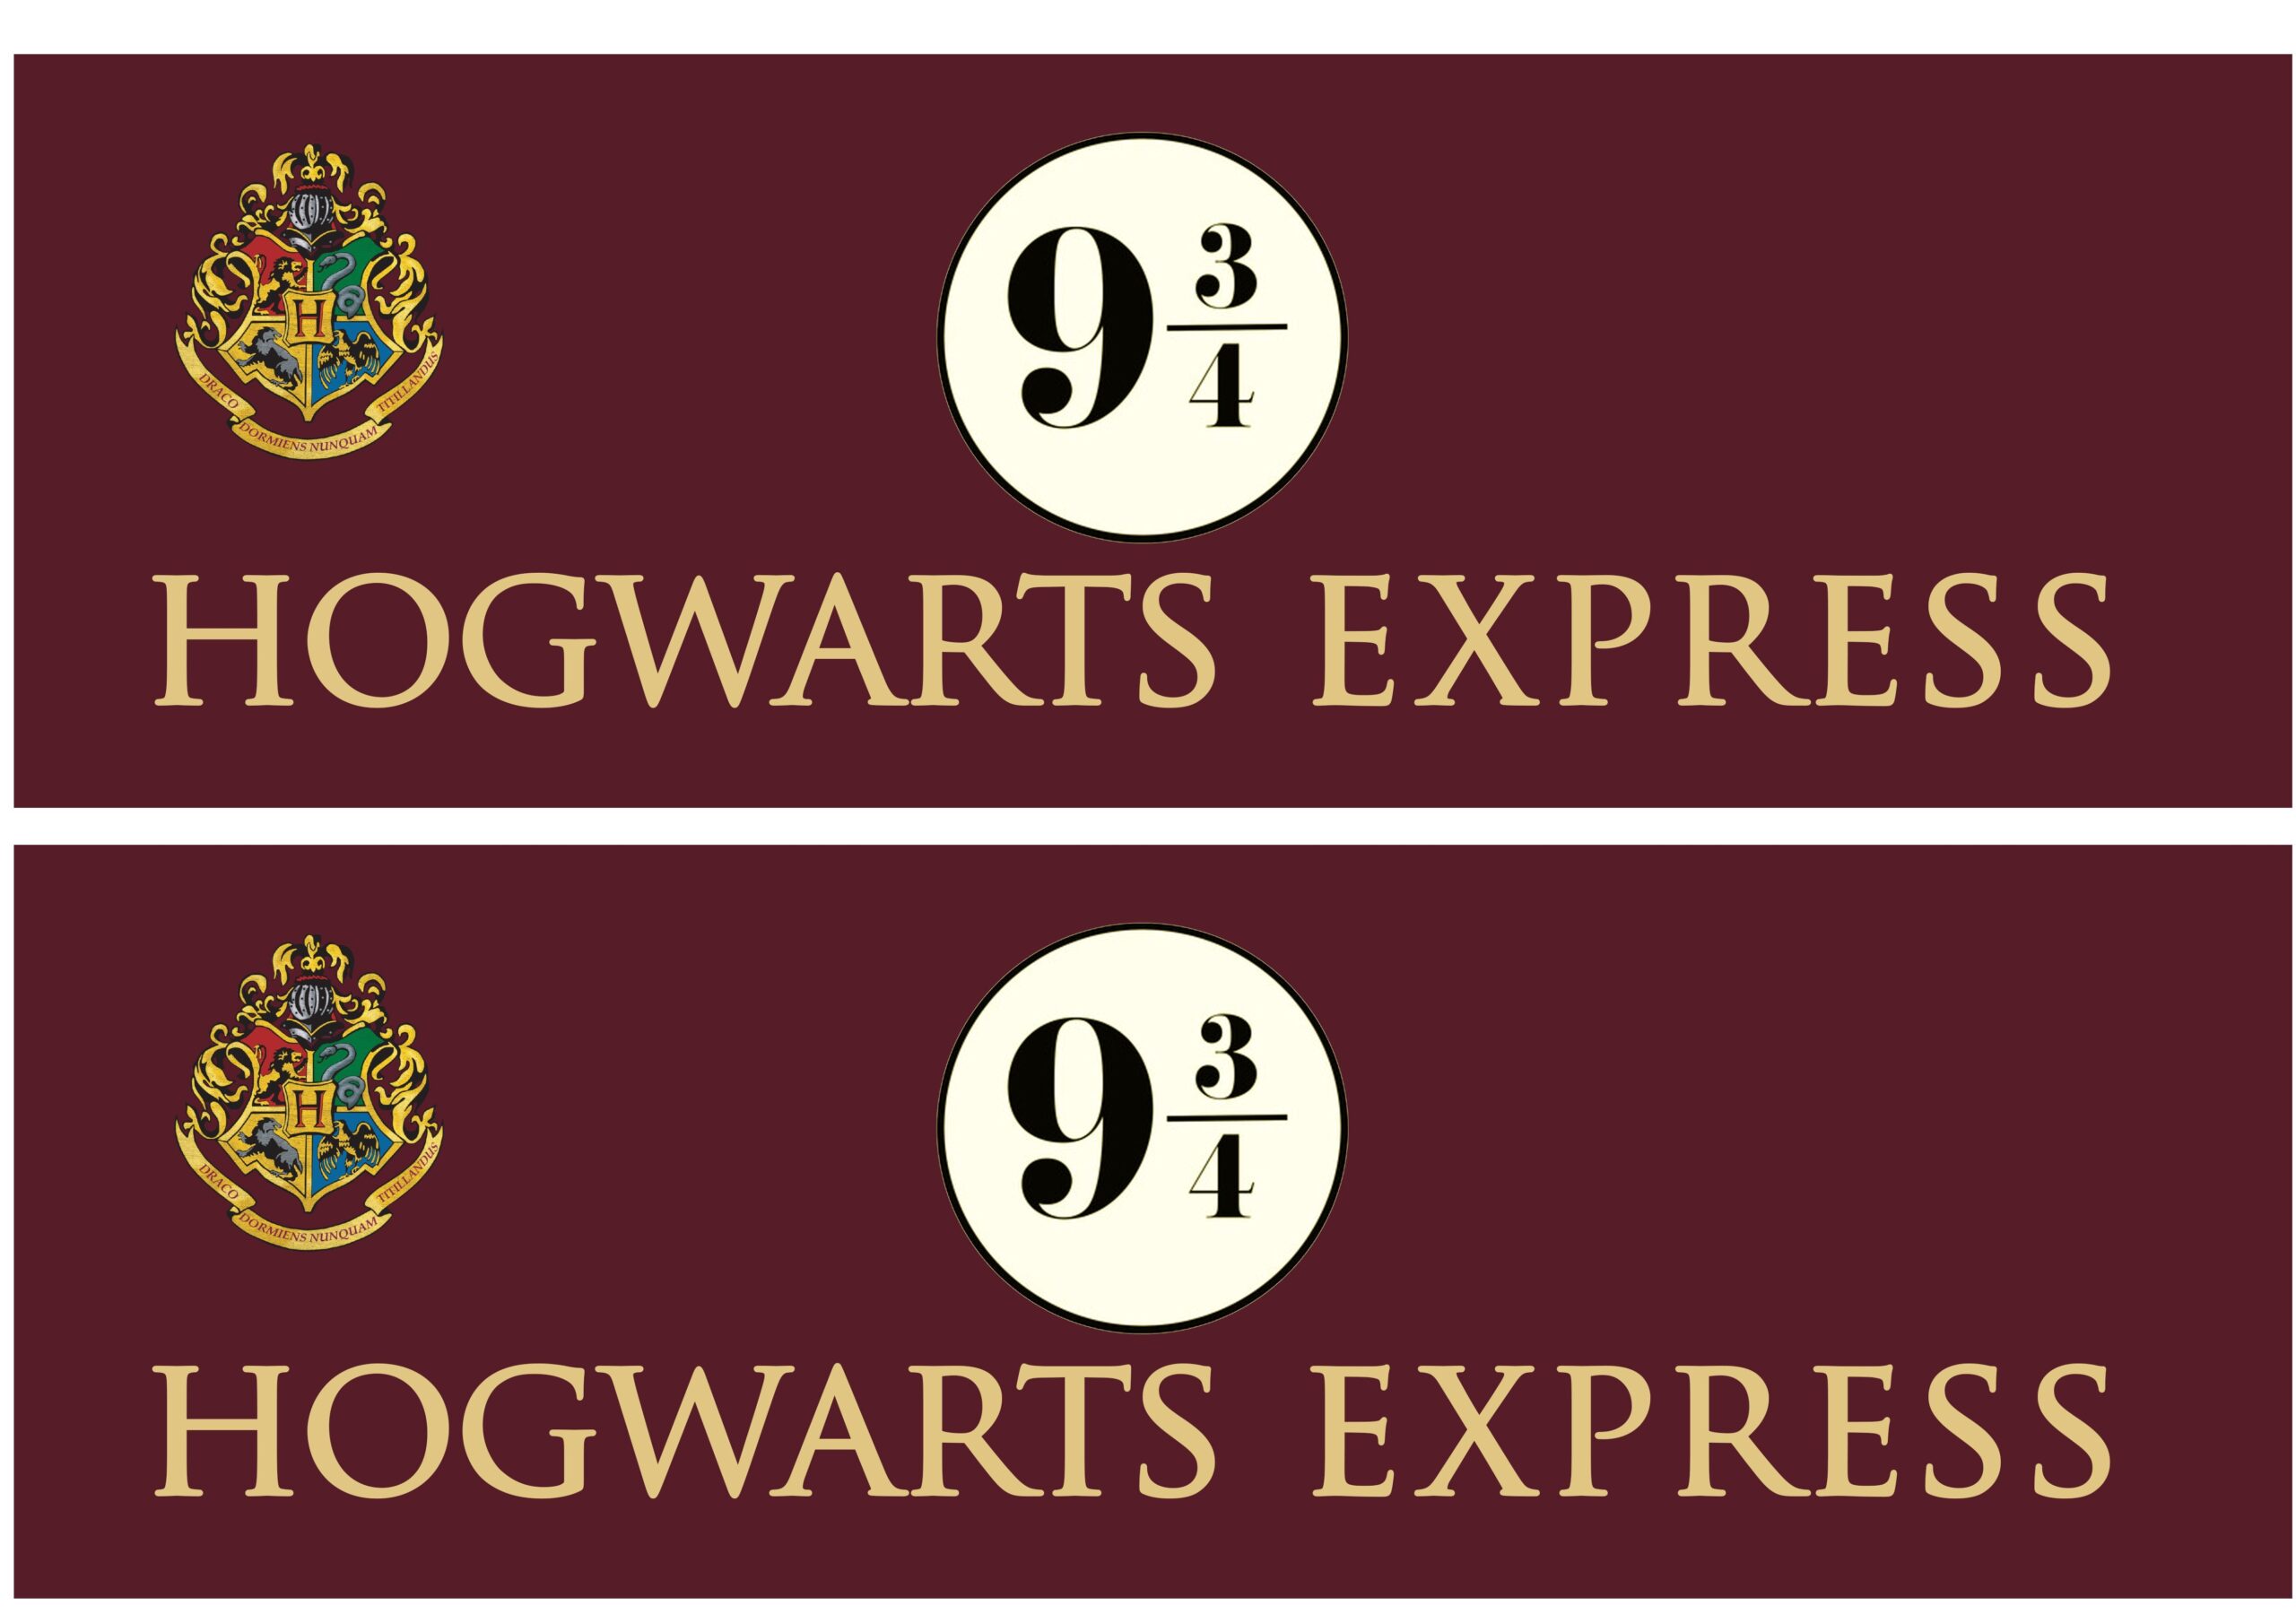 Hogwarts Express Free Downloadable Signage Via Brytontaylor Food In Literature Harry Potter Printables Harry Potter Bday Harry Potter Birthday